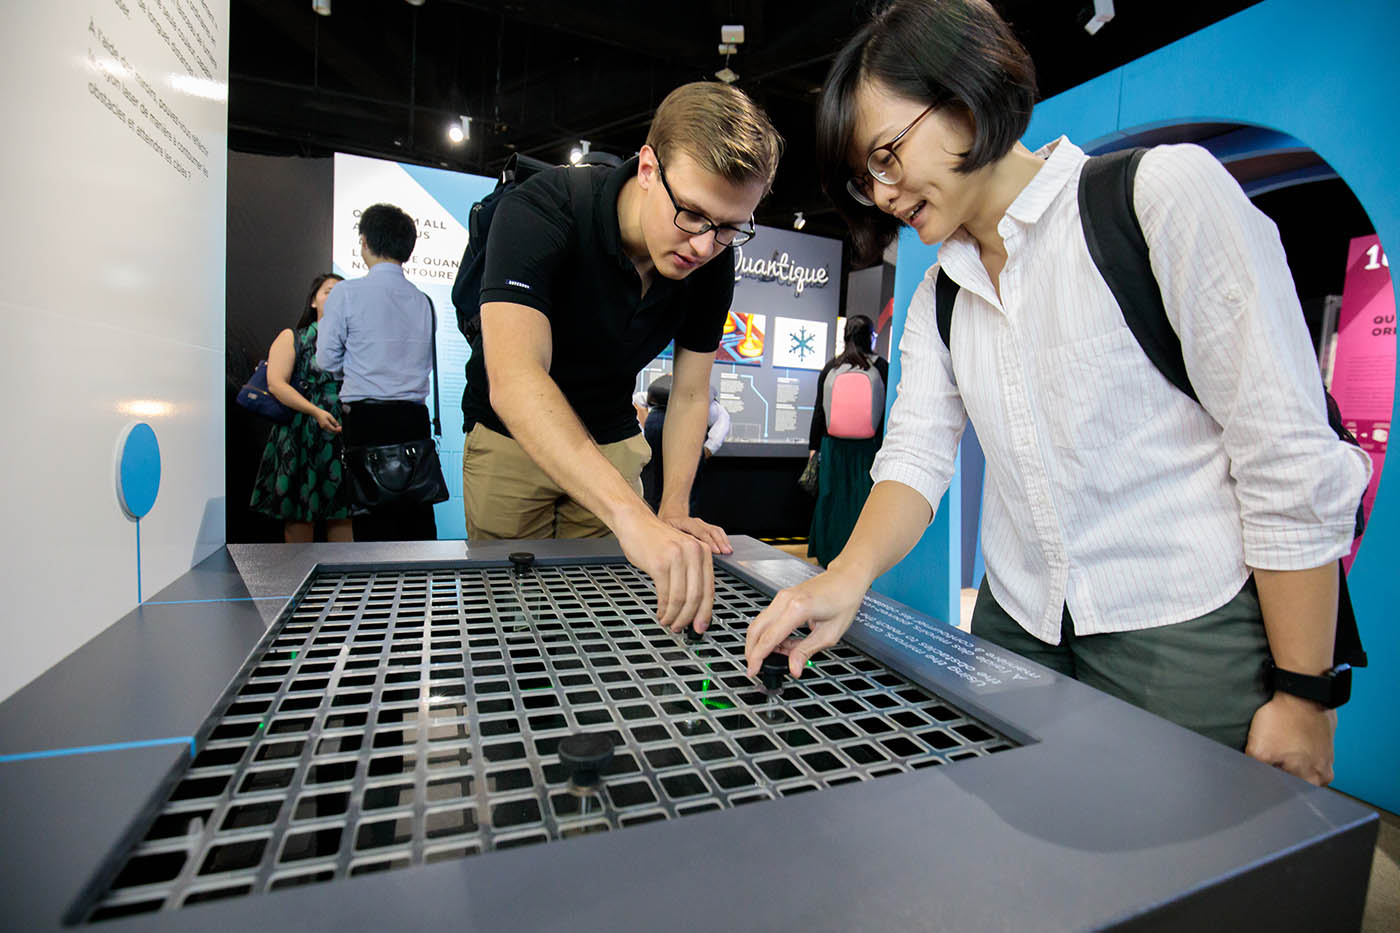 Visitors interacting with quantum exhibits in Science Centre Singapore